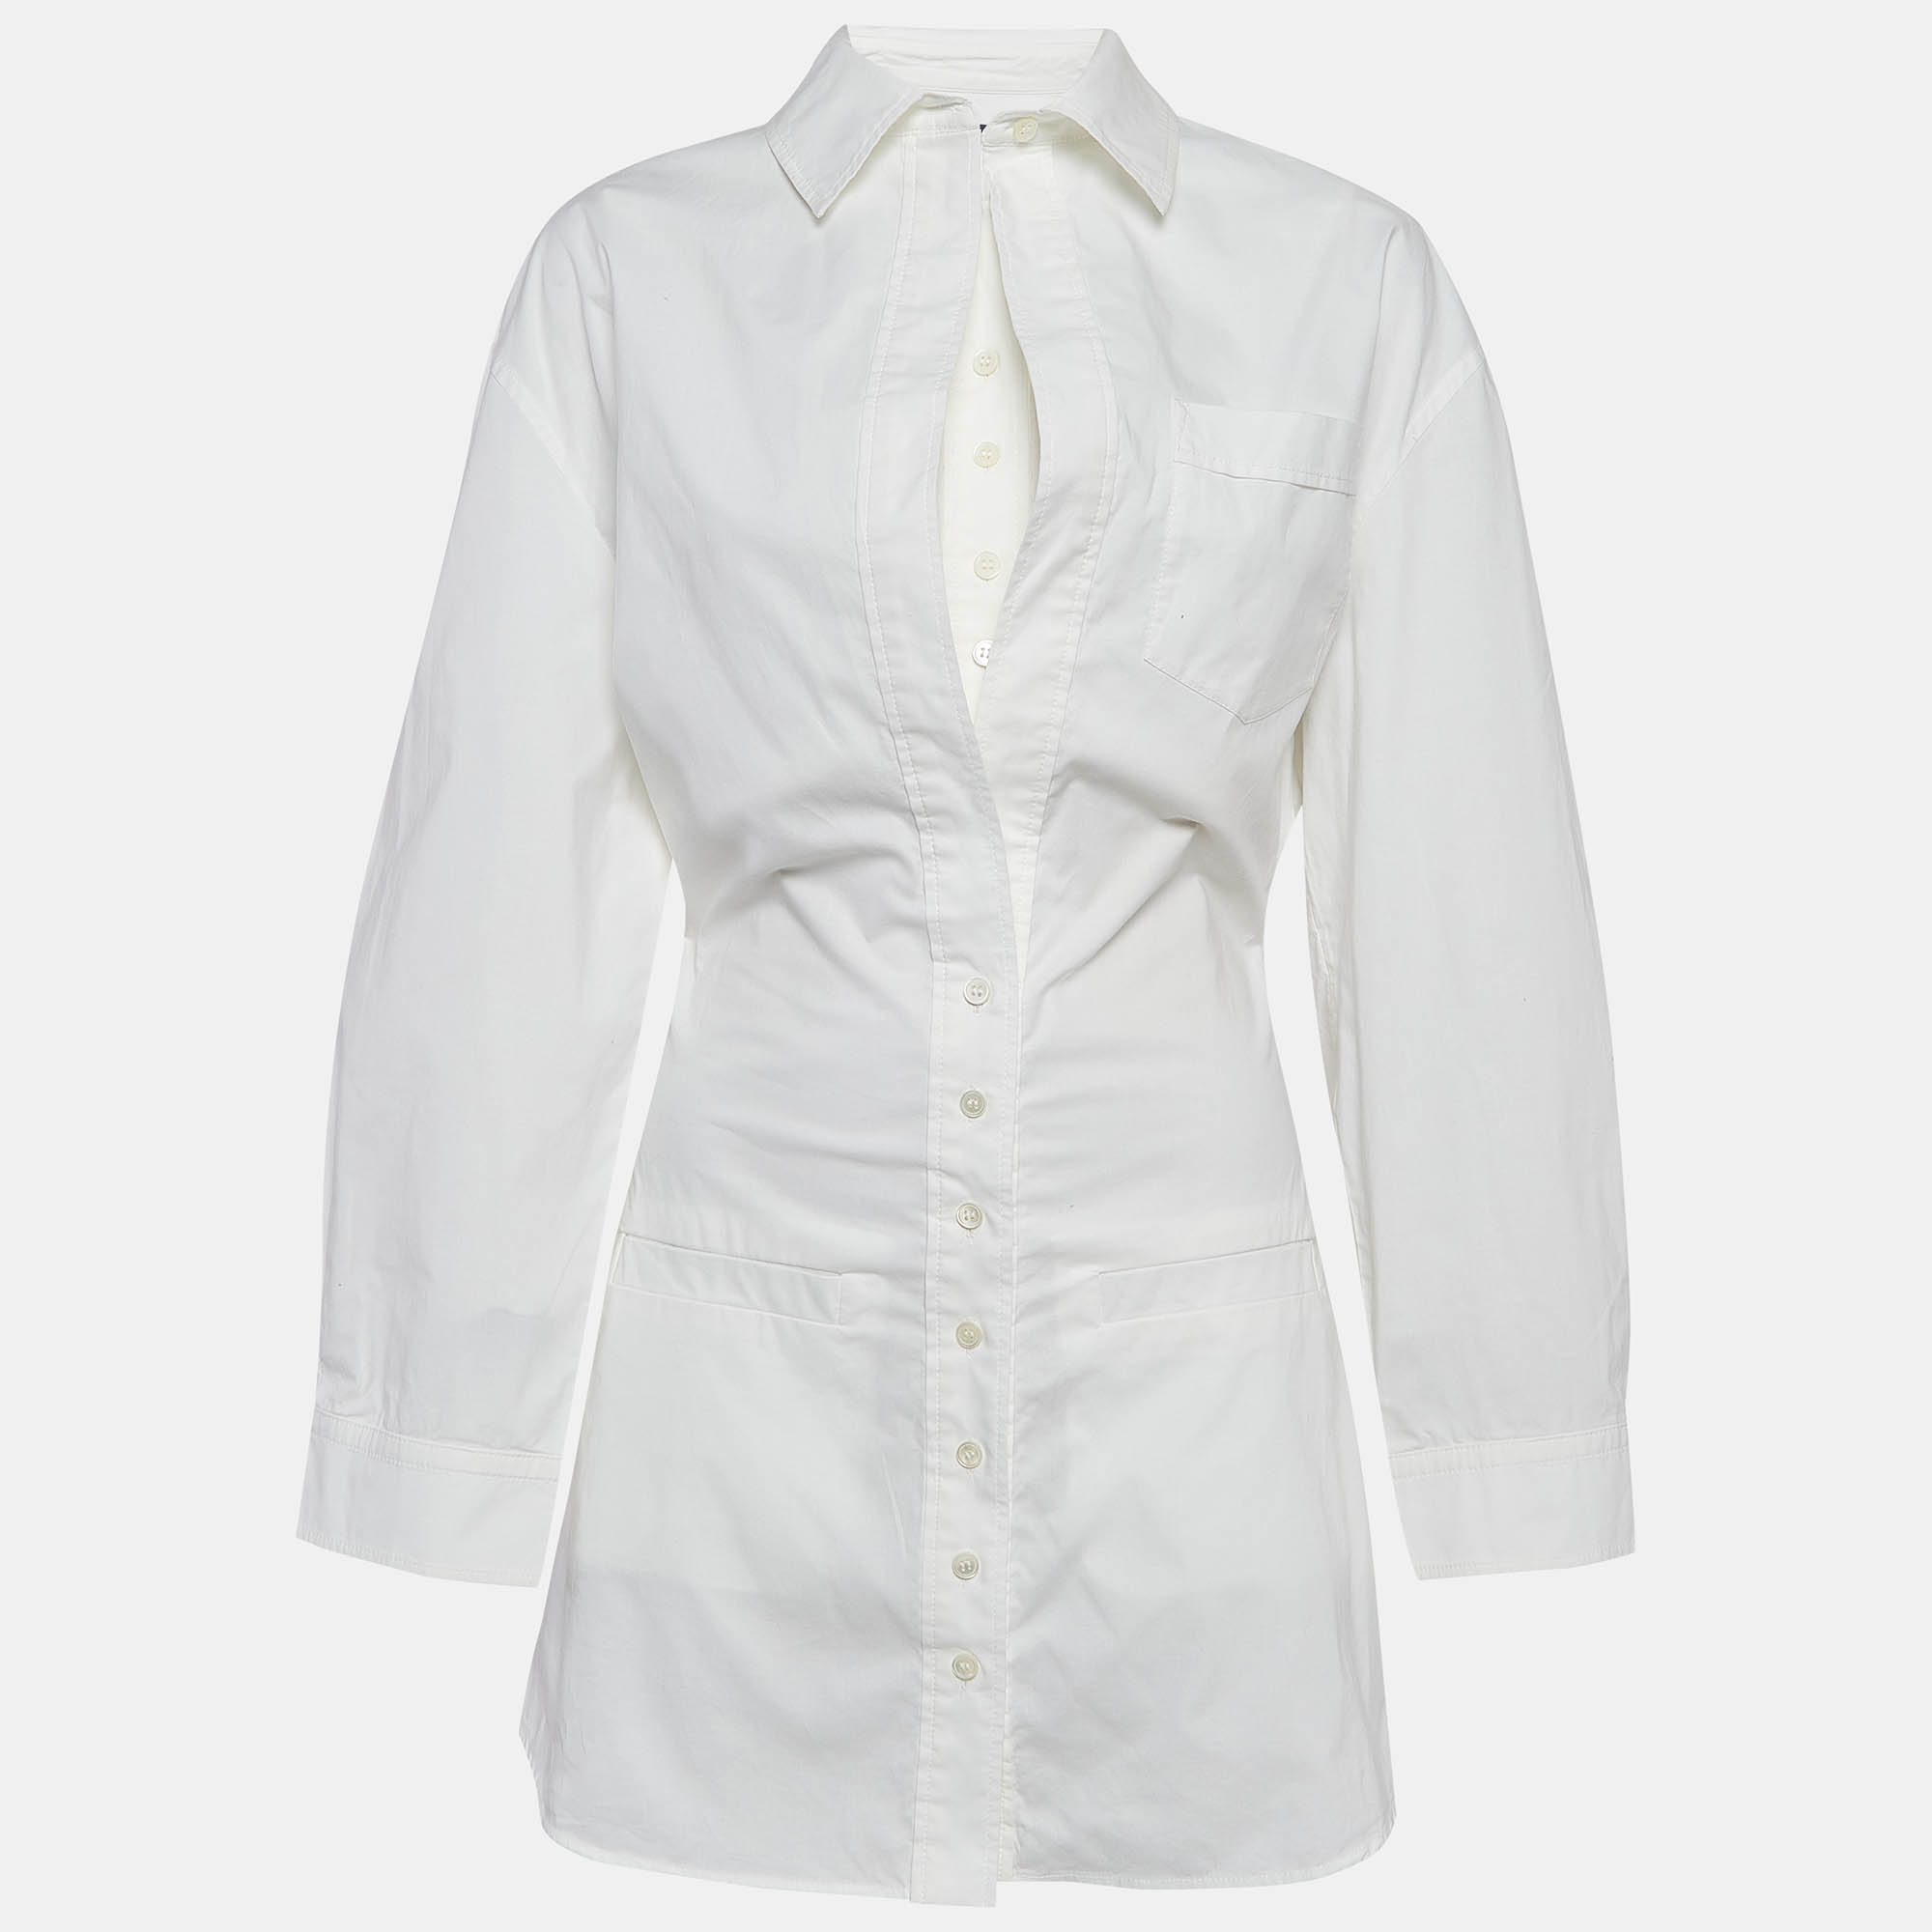 Jacquemus le splash white layered cotton shirt dress s